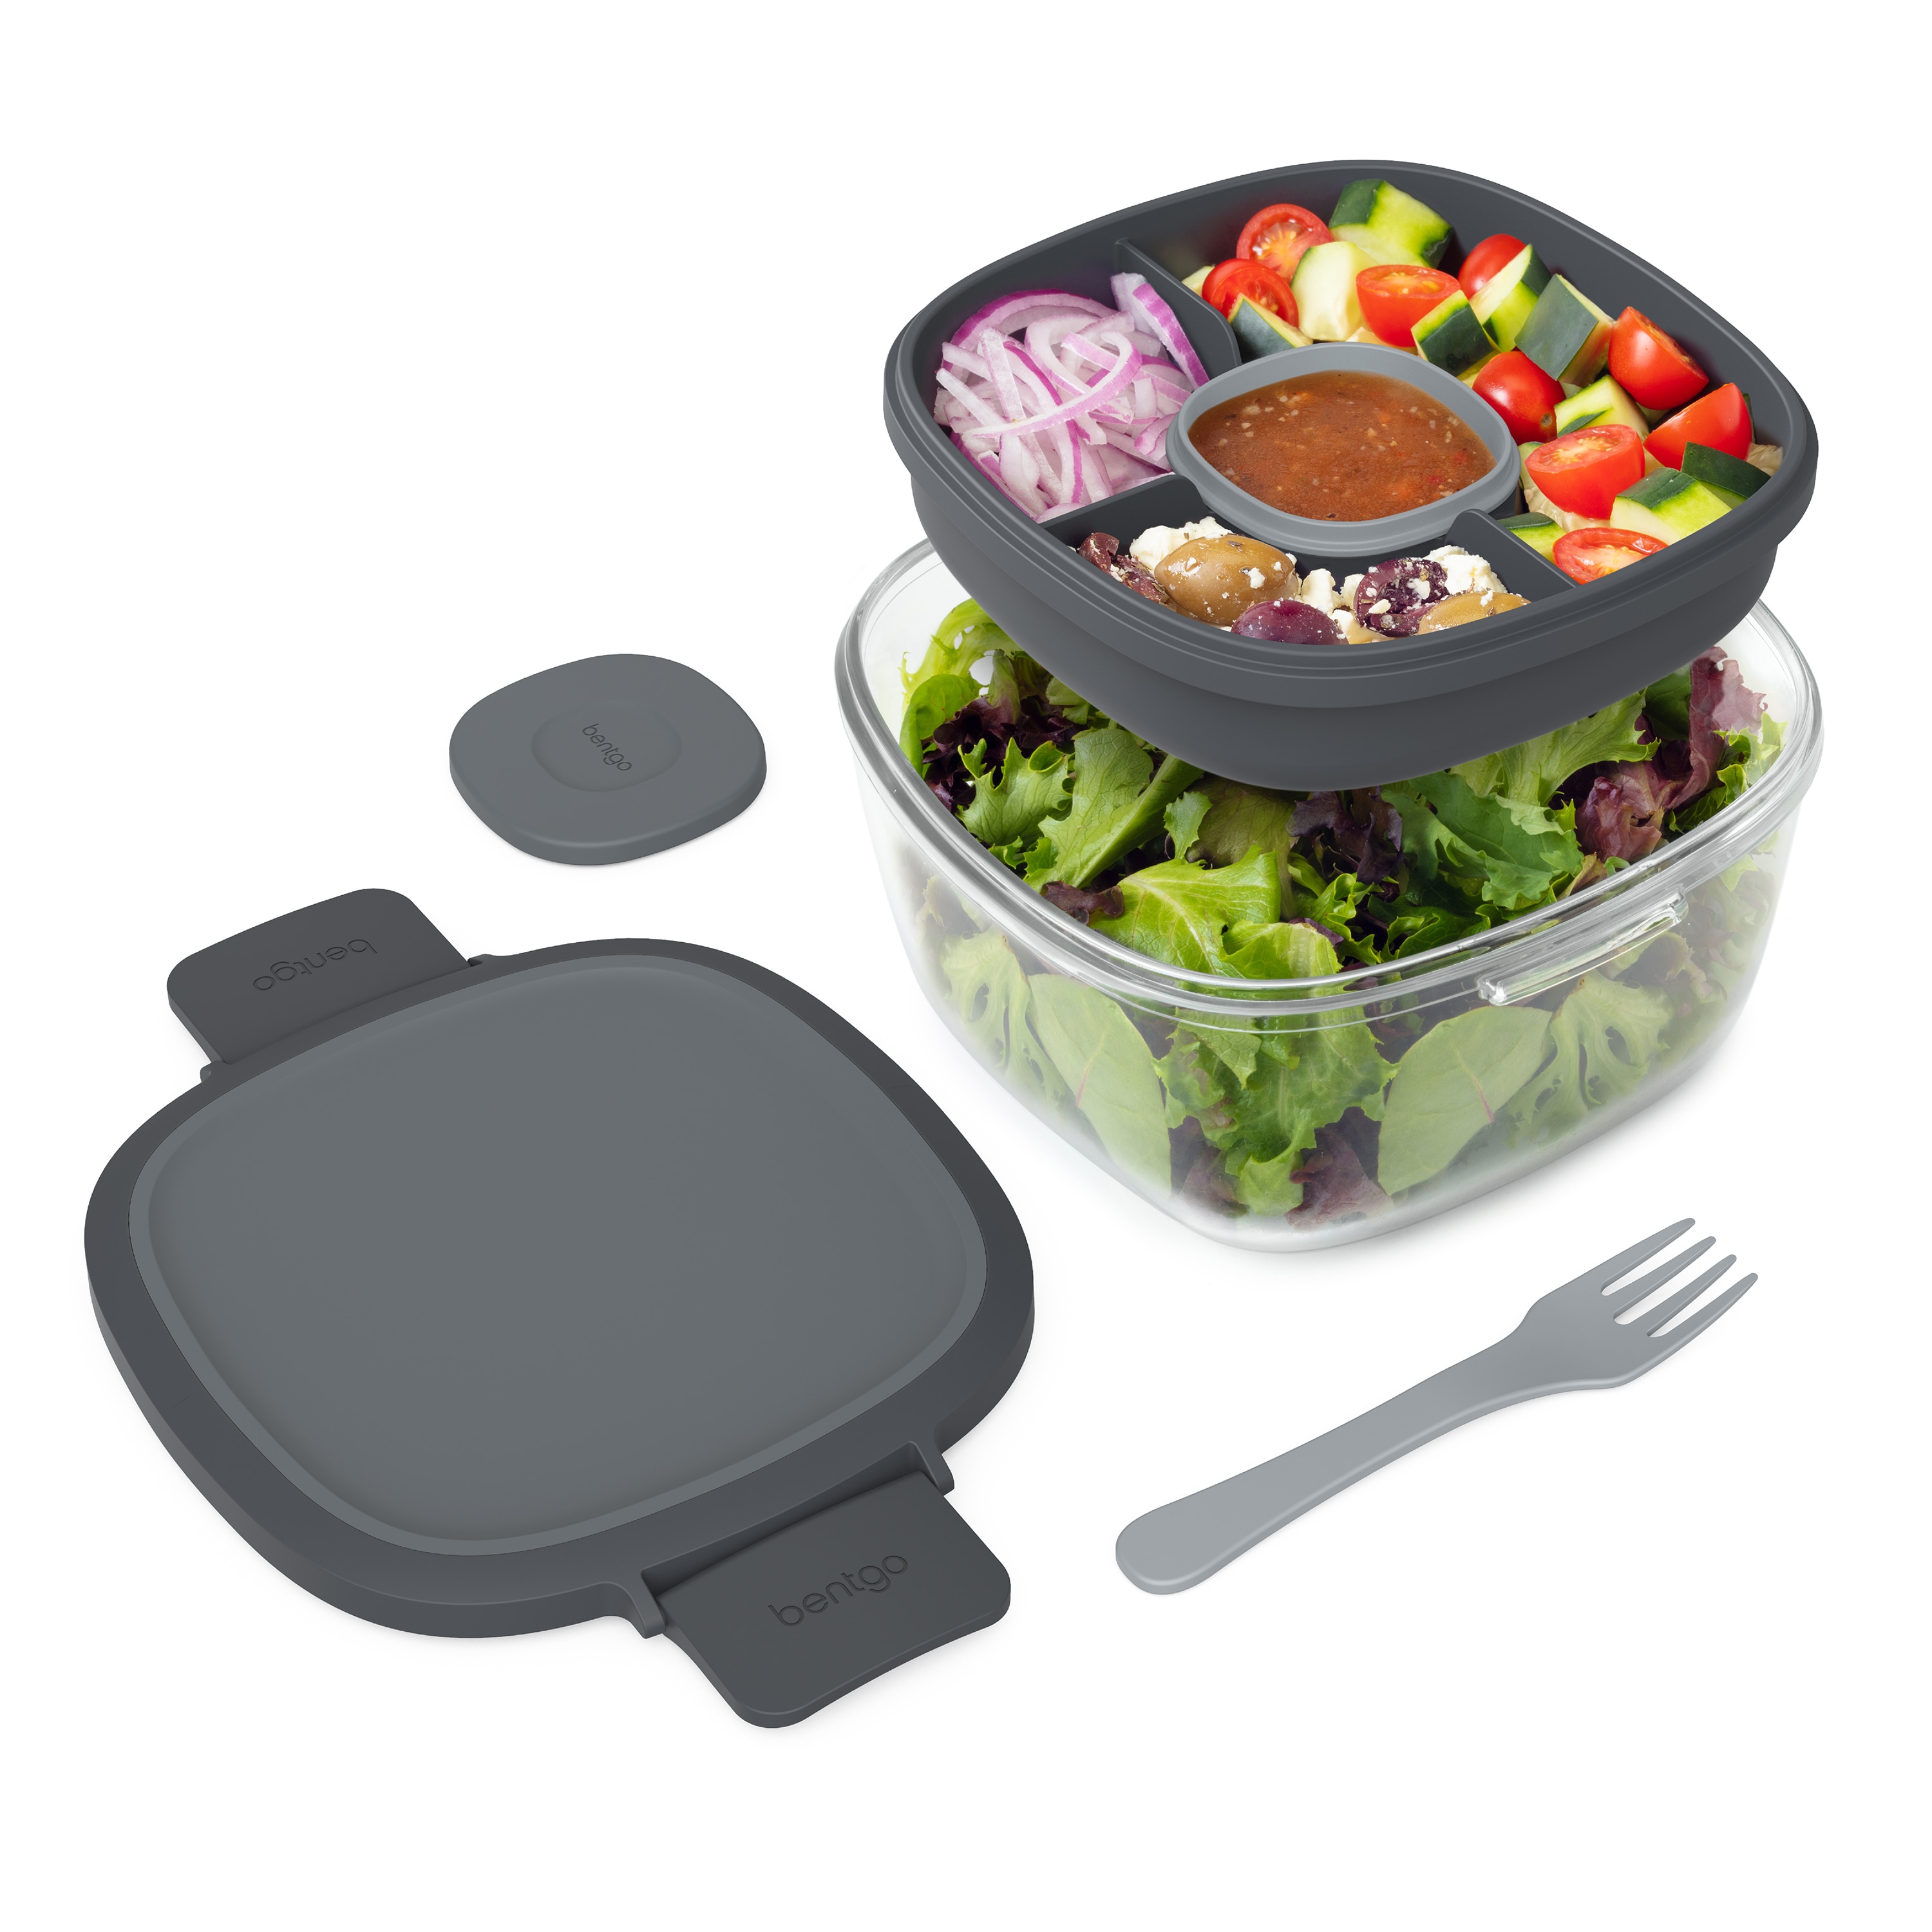 Bentgo Glass Leak-Proof Salad Container - Gray